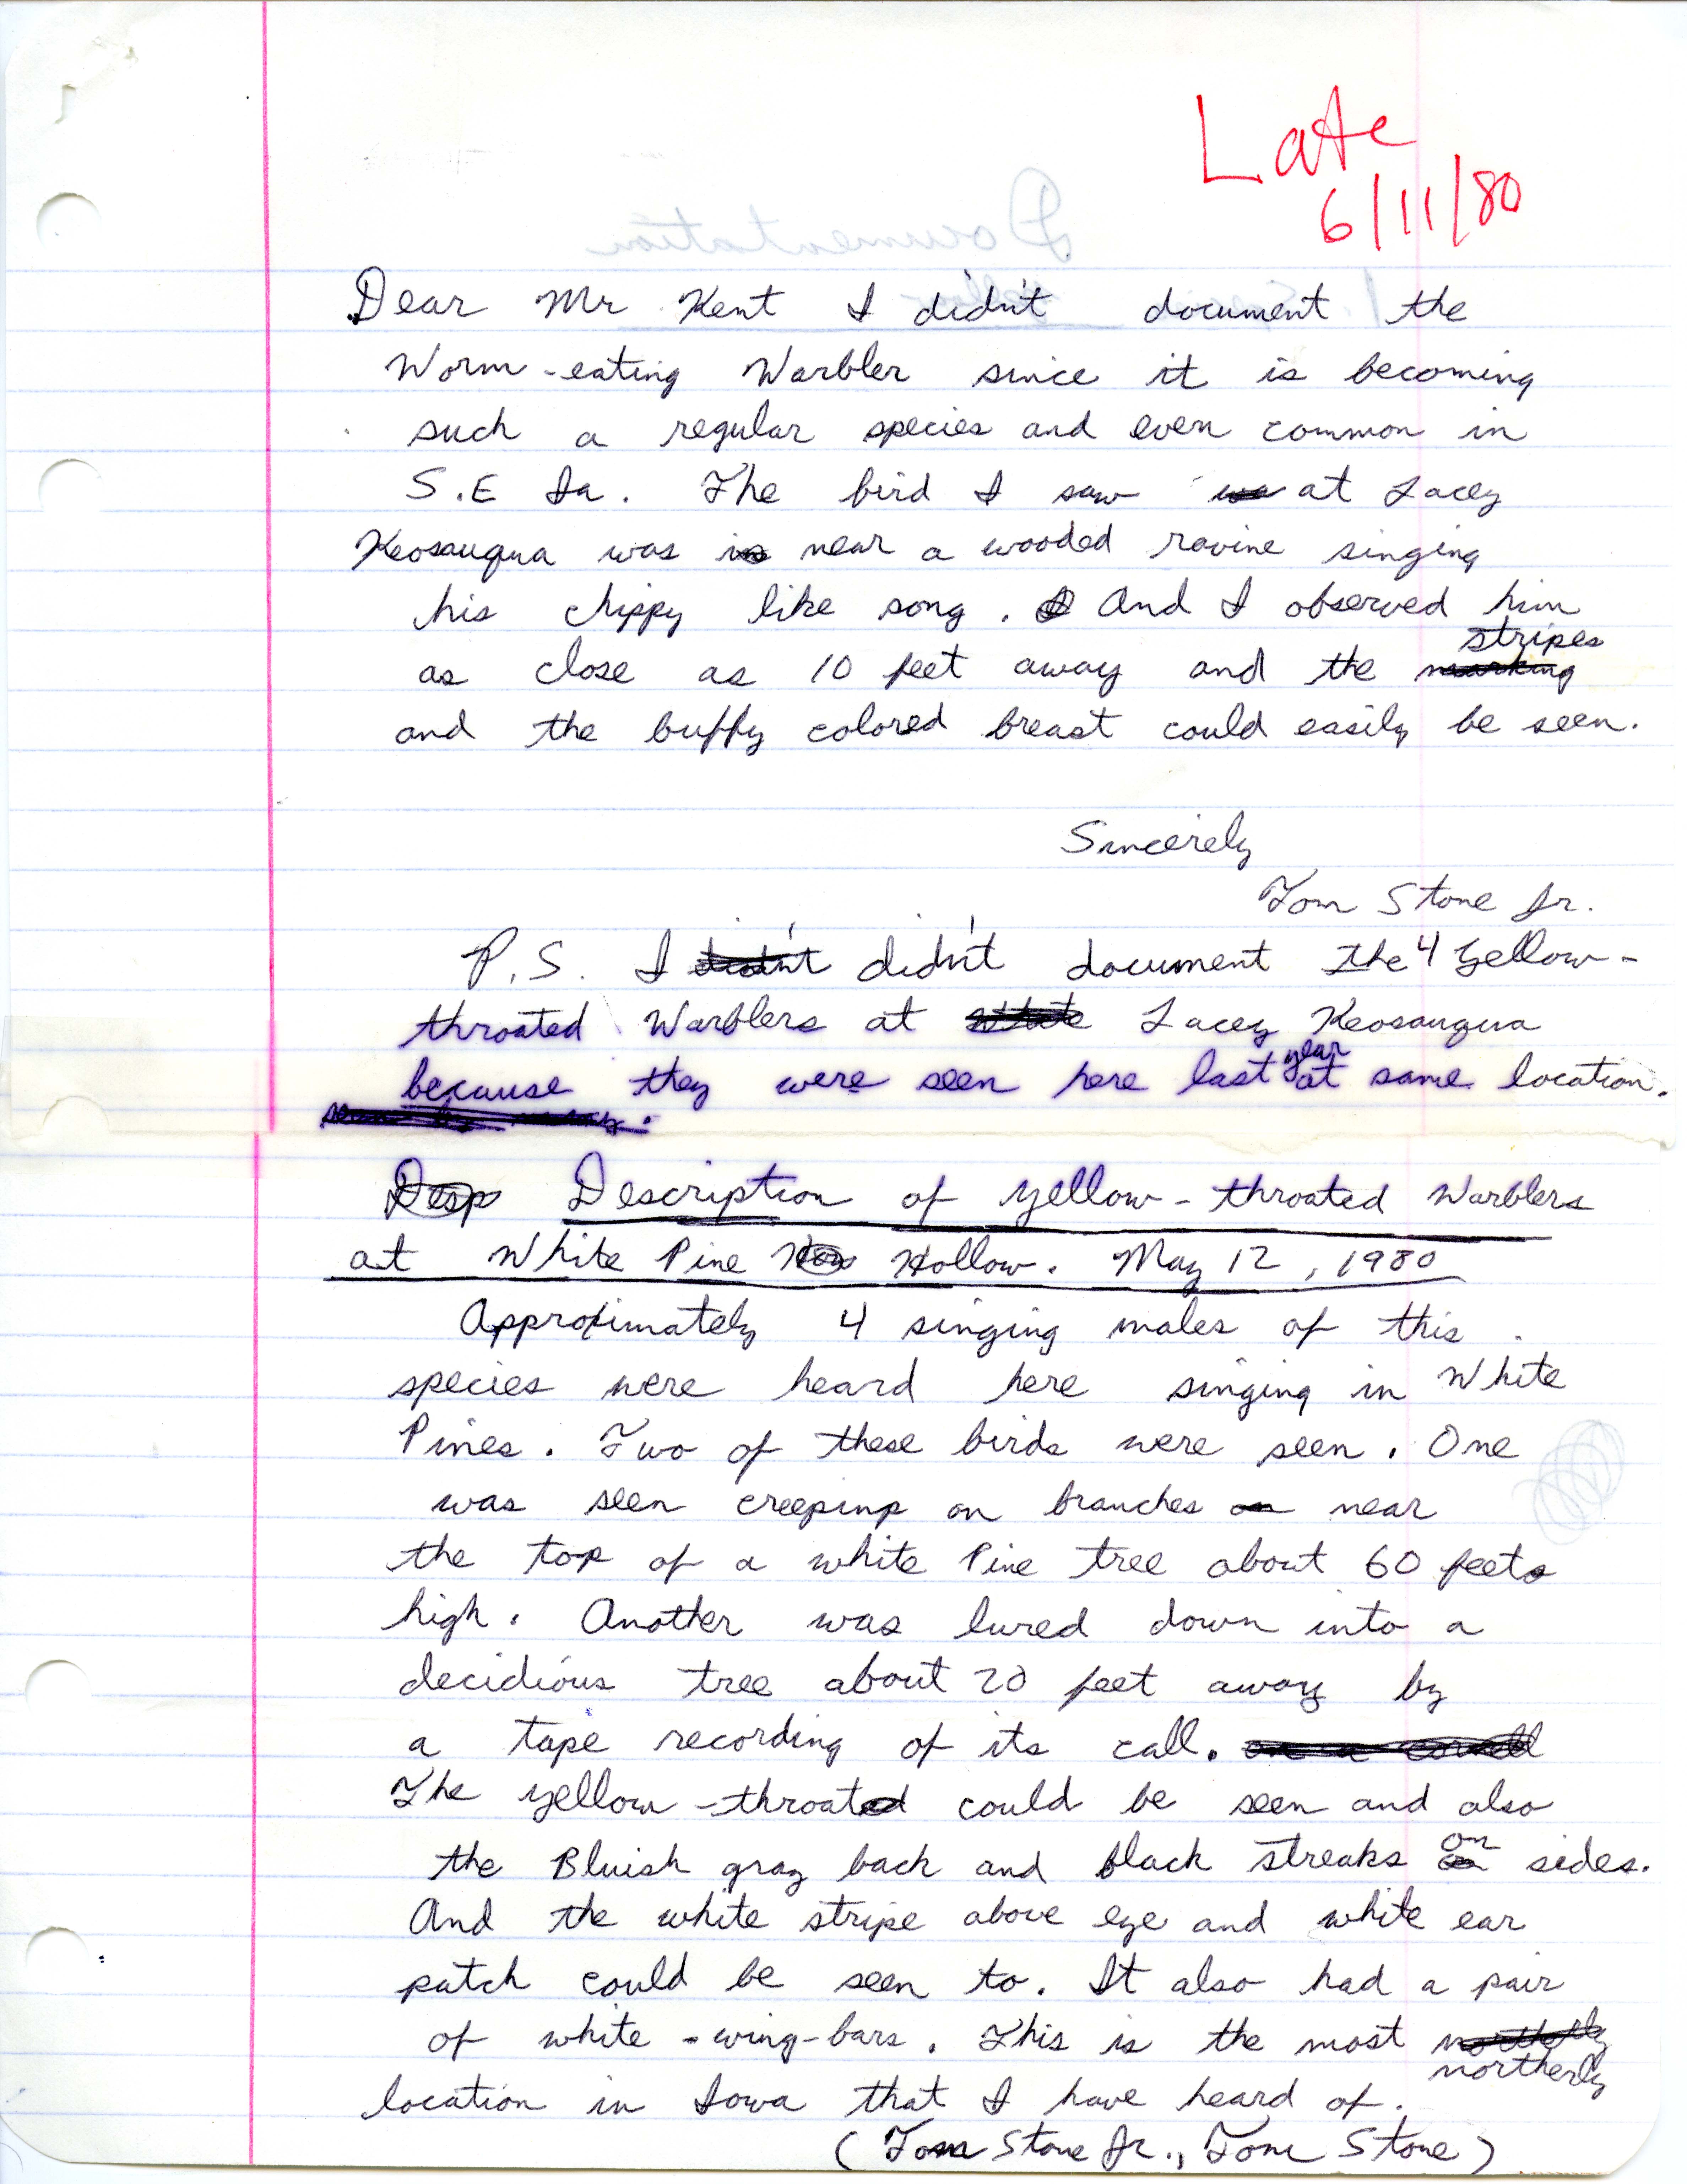 Tom Stone, Jr. letter to Thomas H. Kent regarding bird sightings, spring 1980